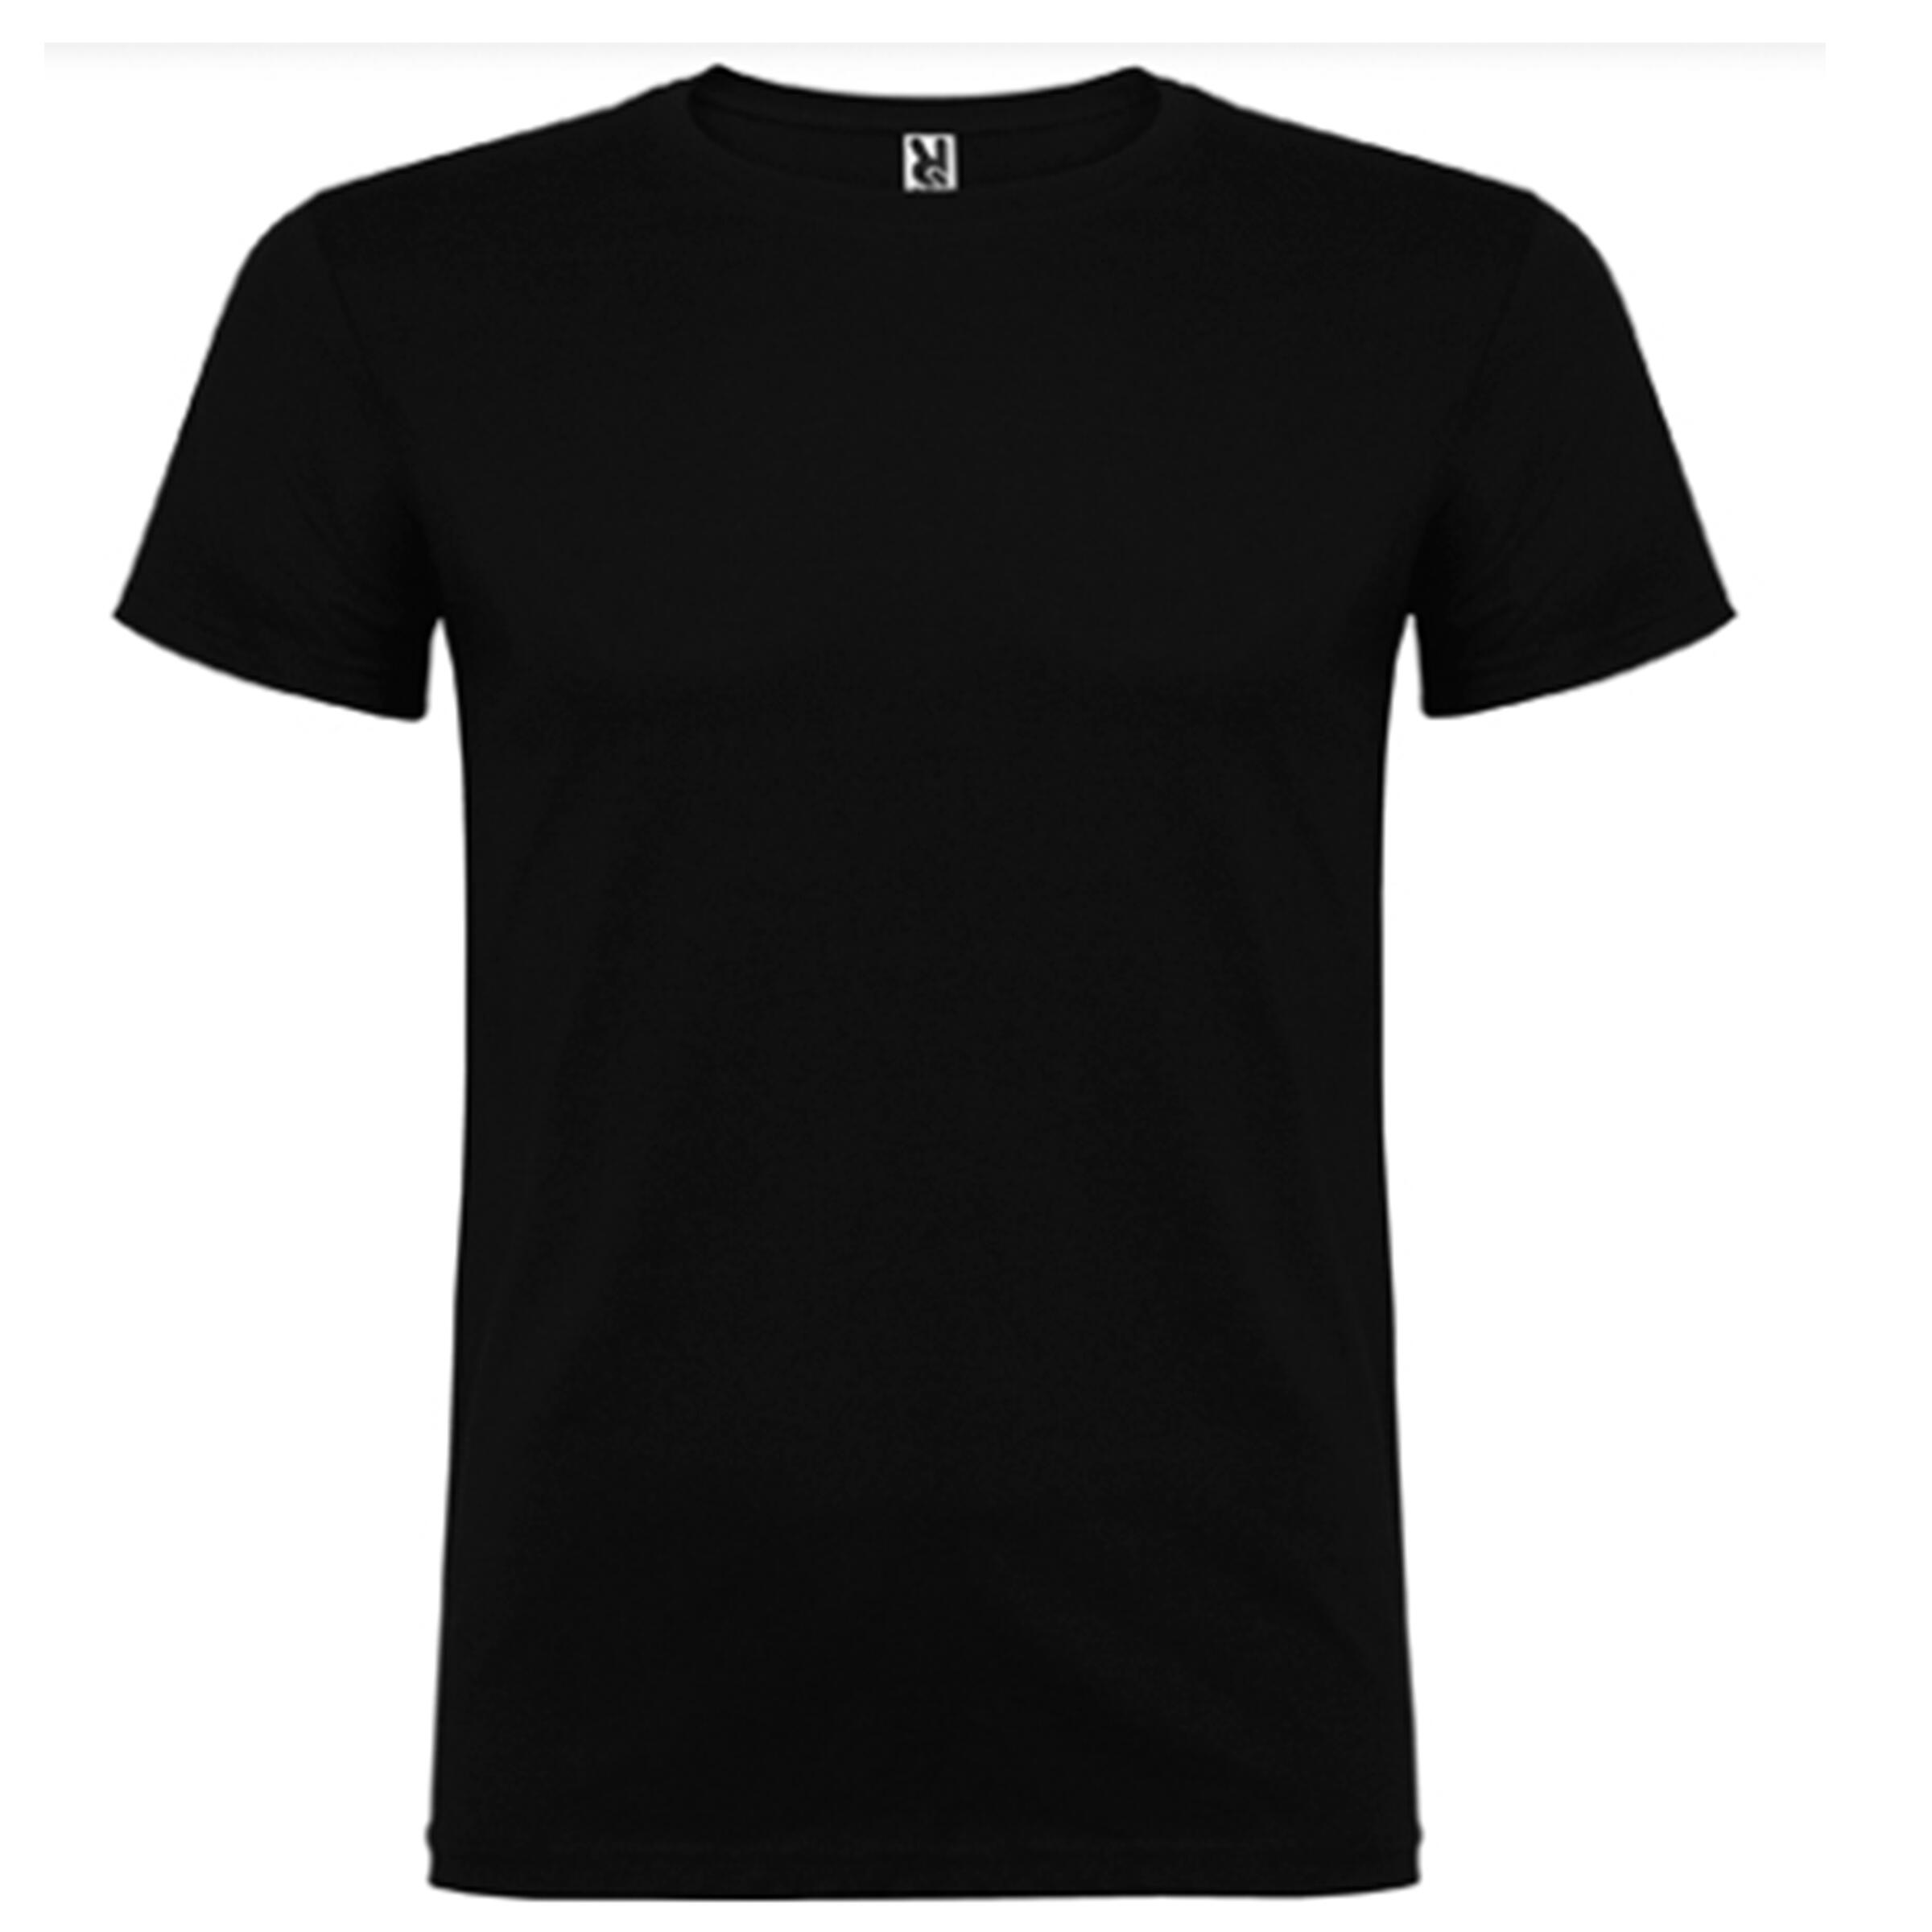 cielo sobre Misionero Camiseta Negra Decathlon Niño Sale Online - deportesinc.com 1688039552